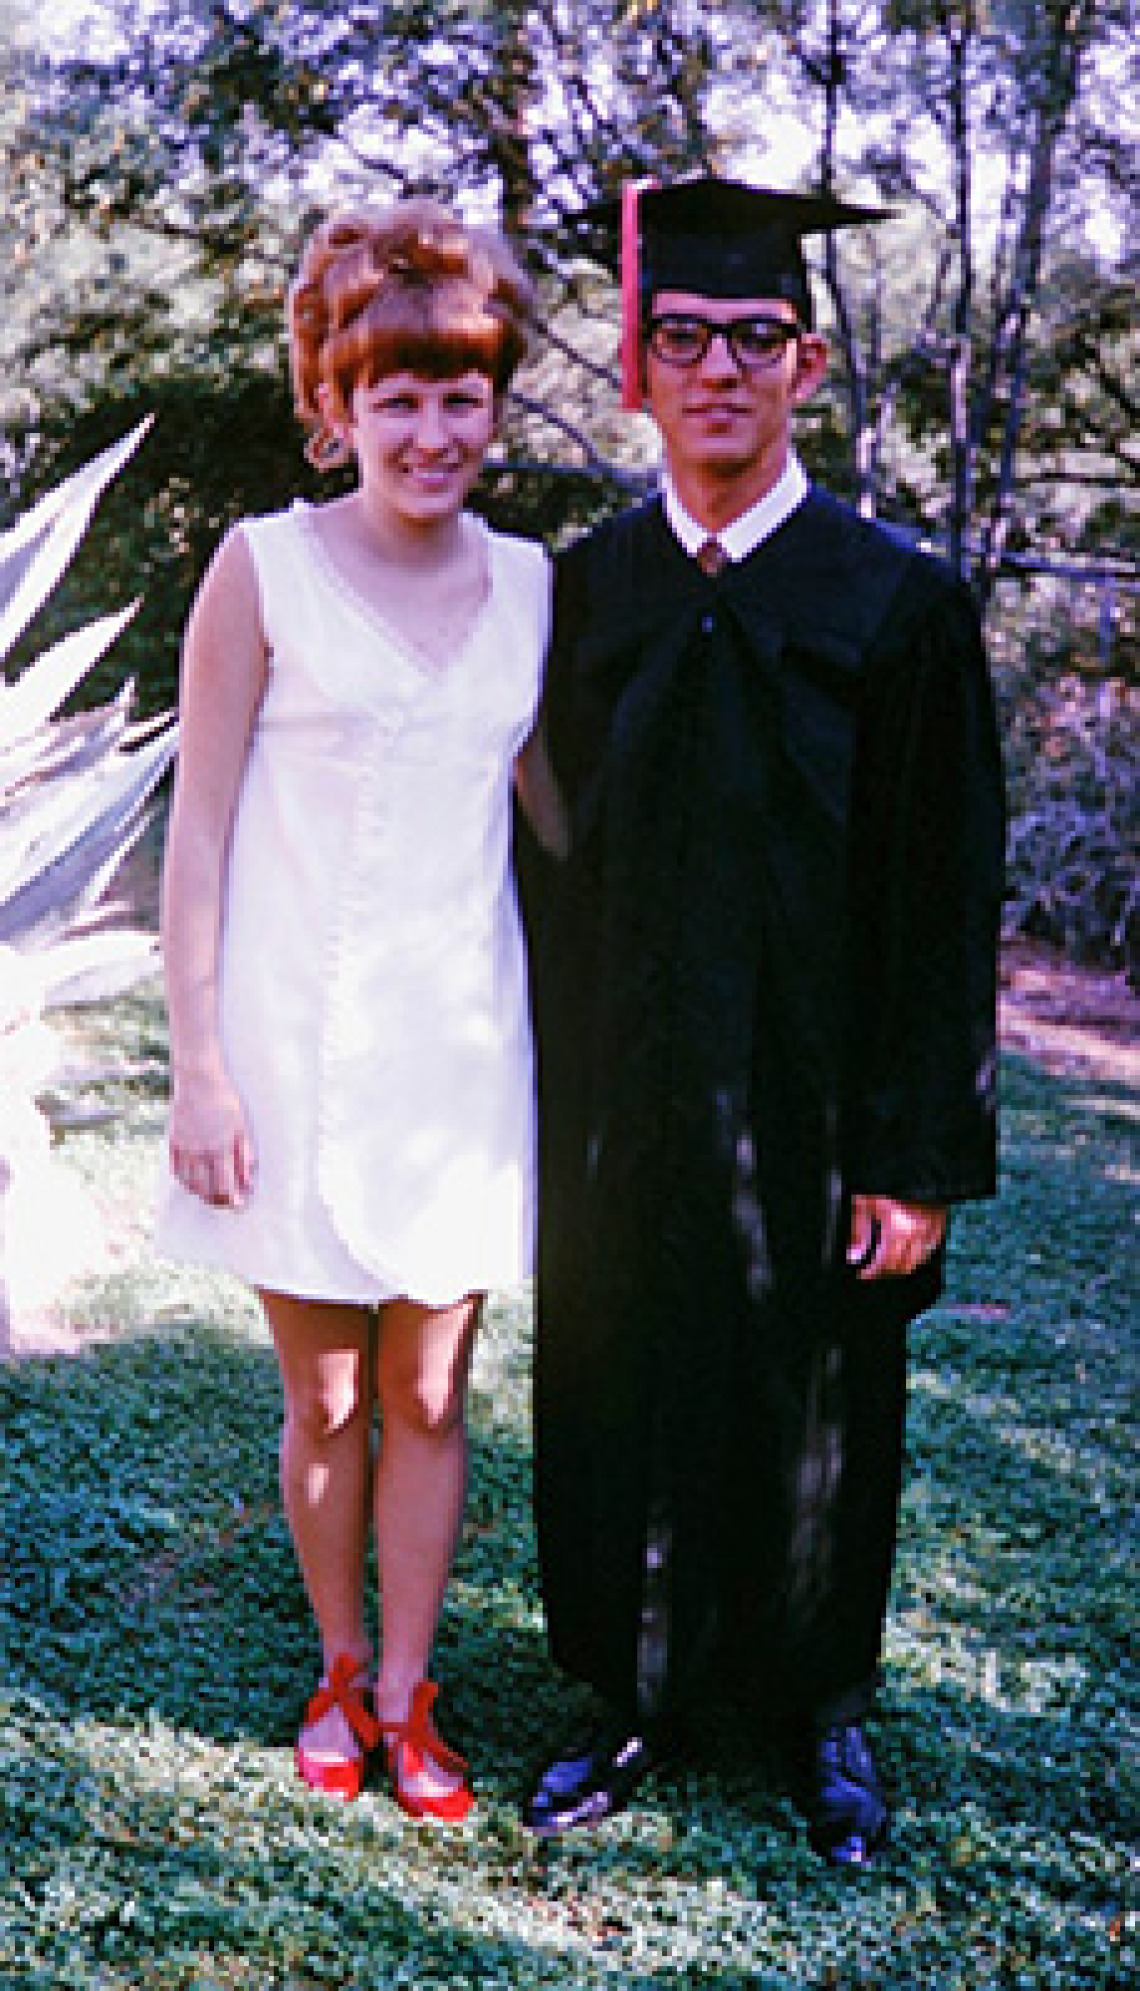 woman in white dress, man in graduation regalia